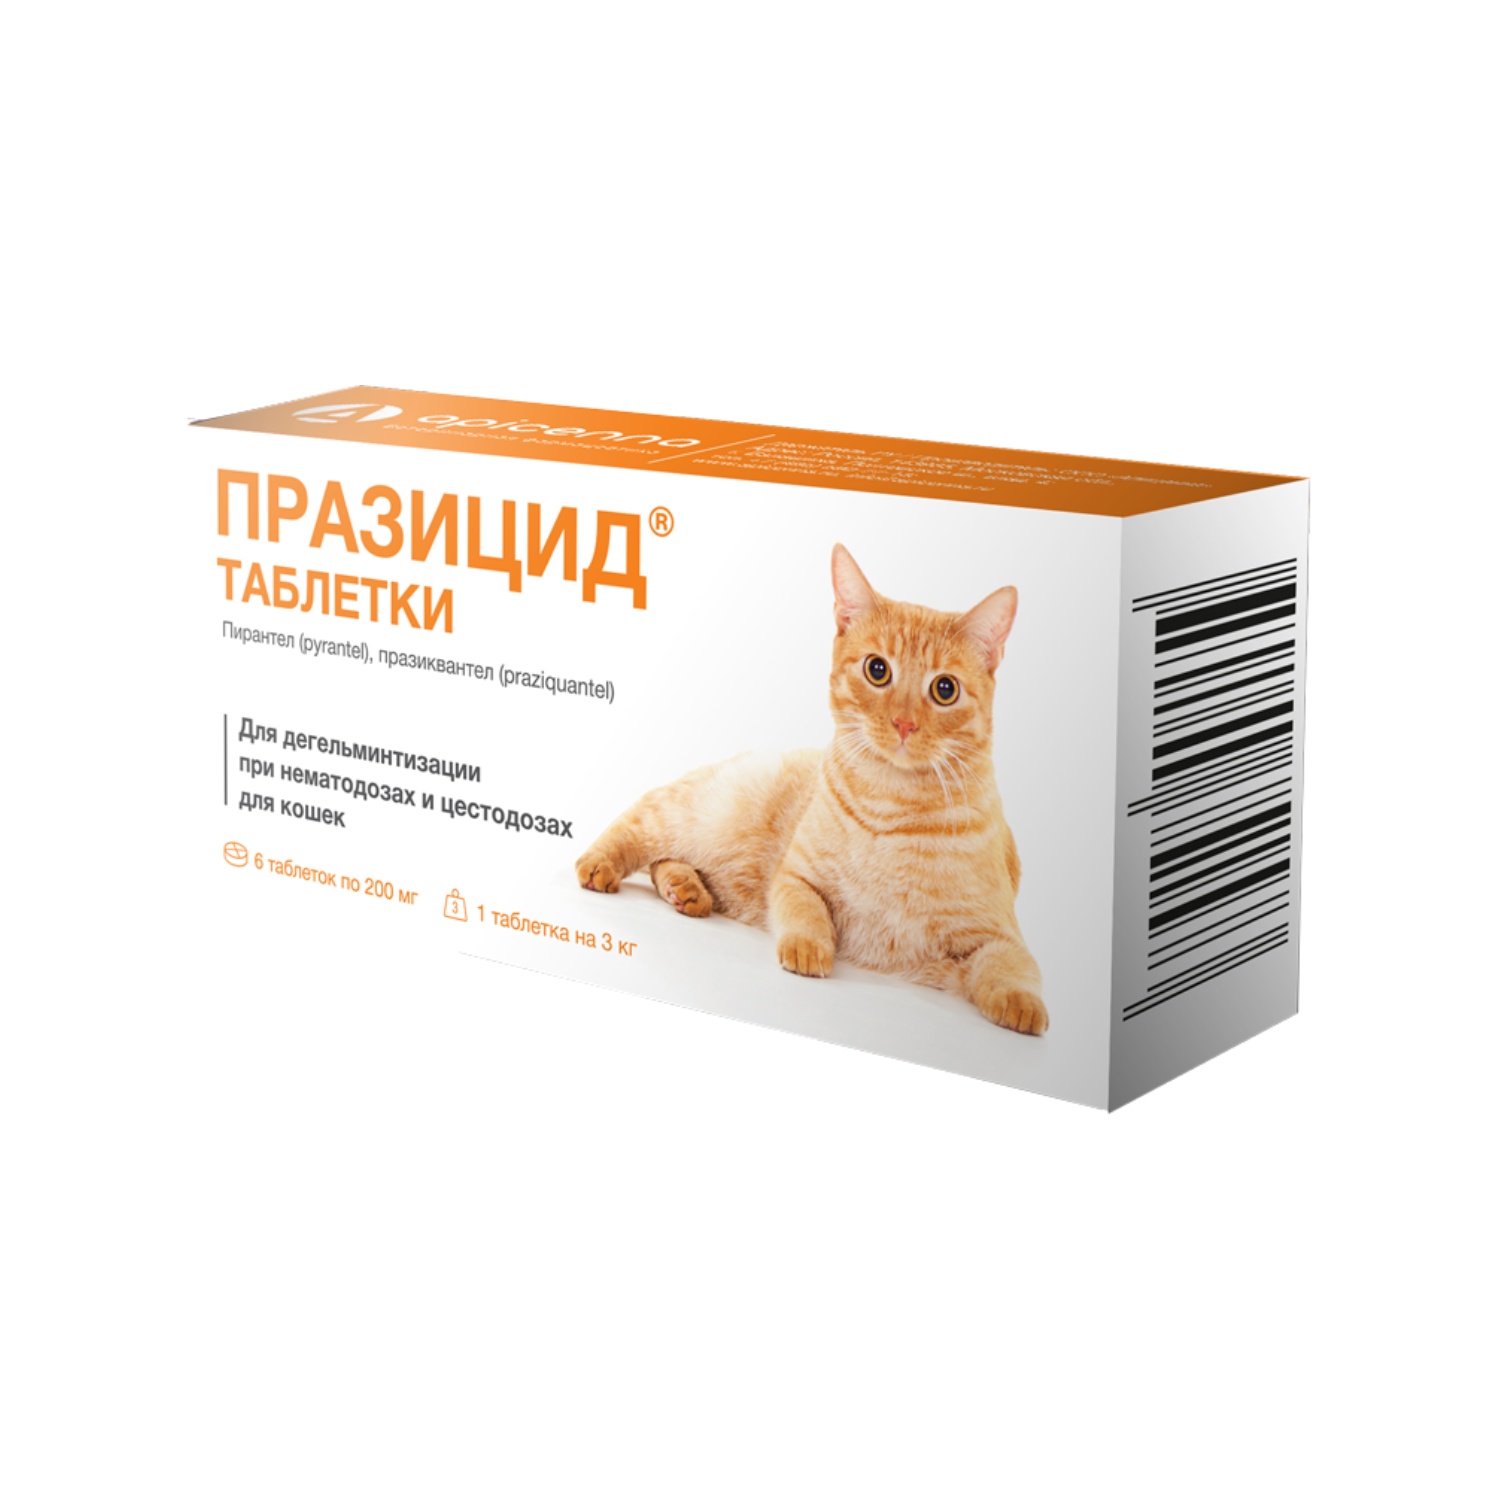 Таблетки для кошек от гельминтов Apicenna Празицид 6*200мг - фото 1